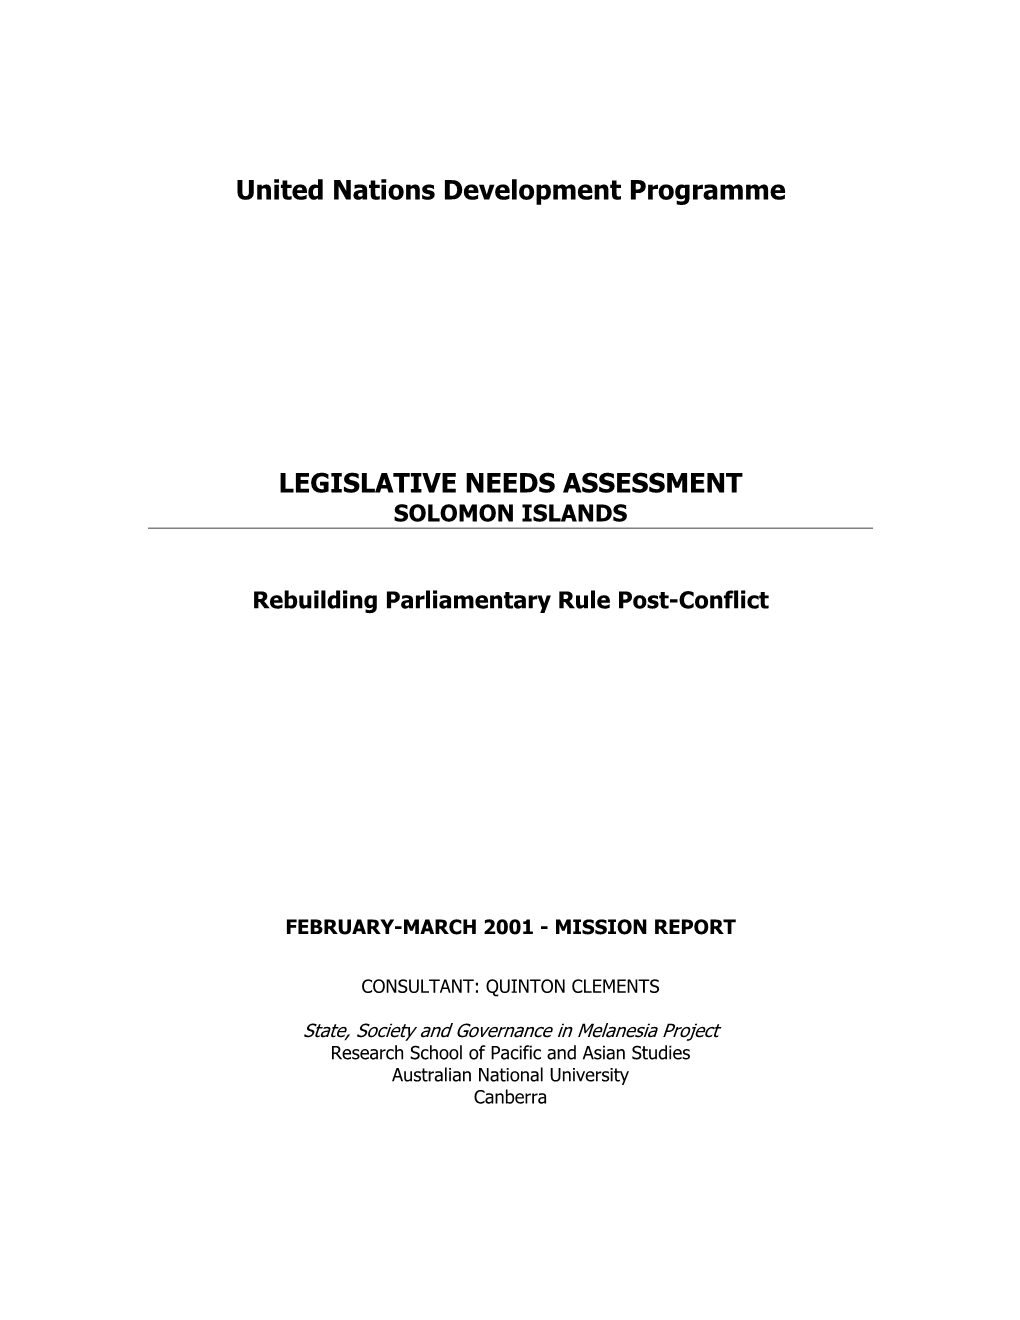 Solomon Islands Legislative Needs Assesment